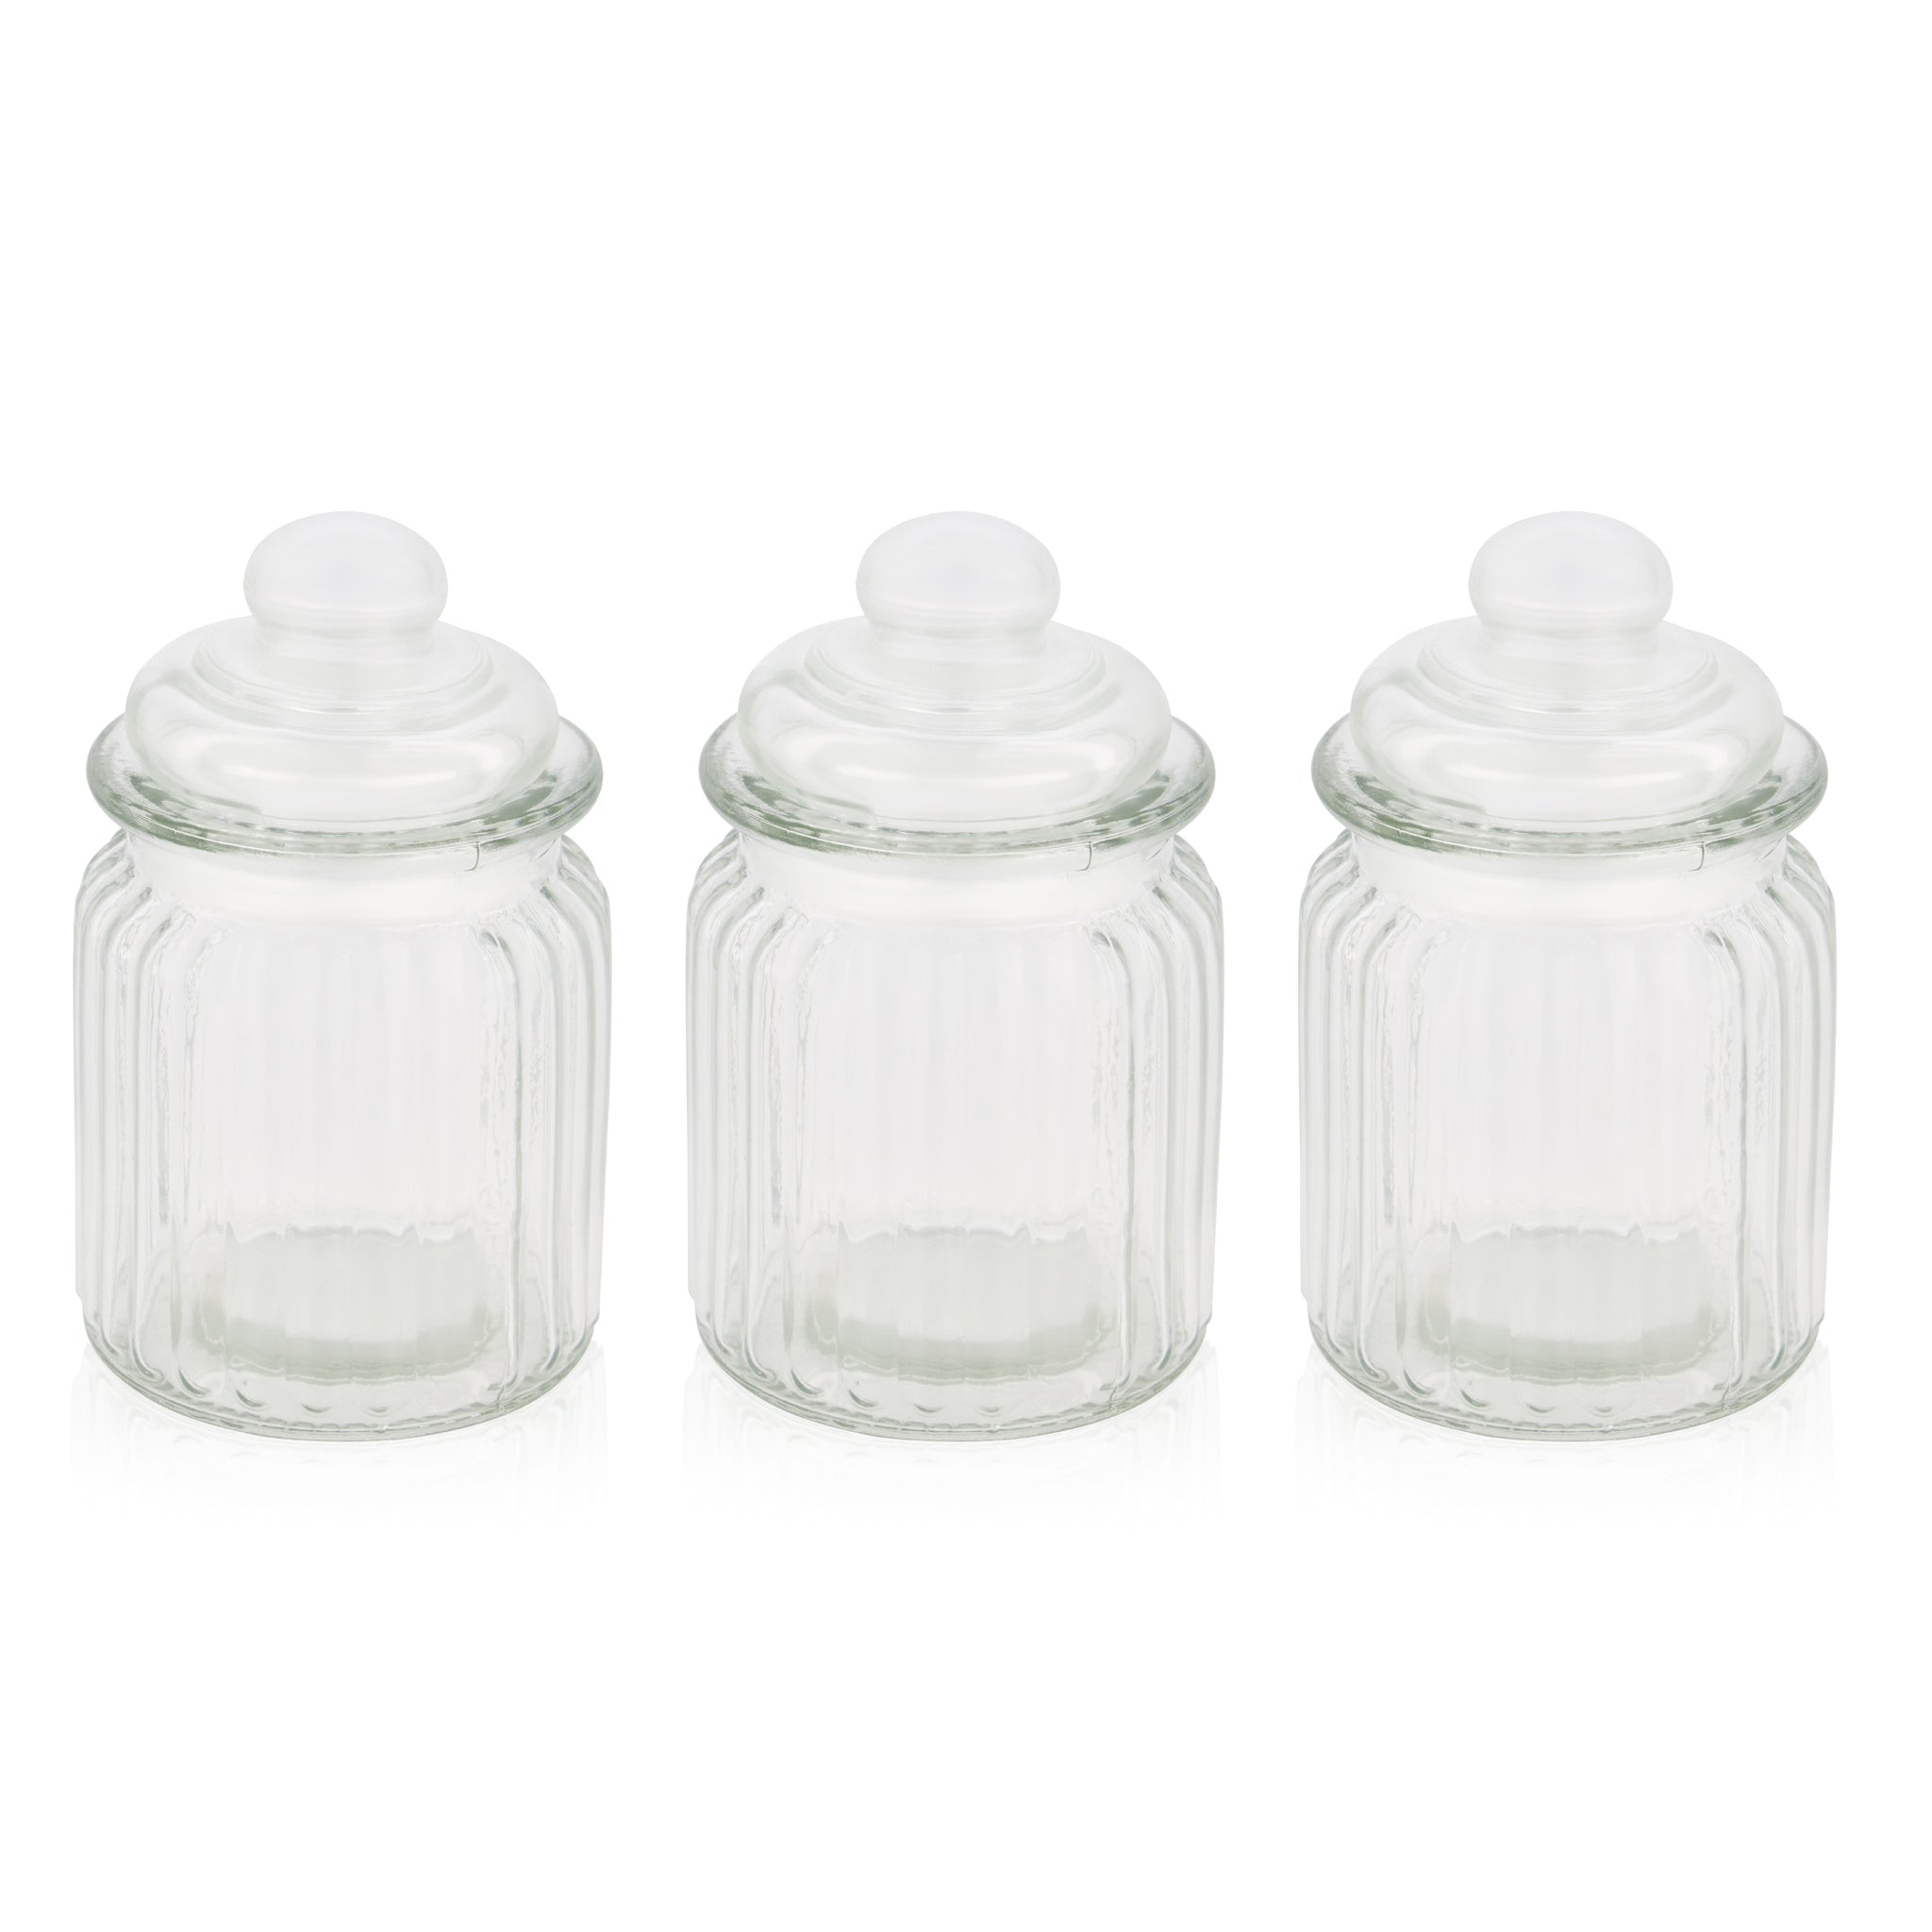 Ribbed Vintage Style Storage Glass Jars - Set of 3 3700938500692 only5pounds-com